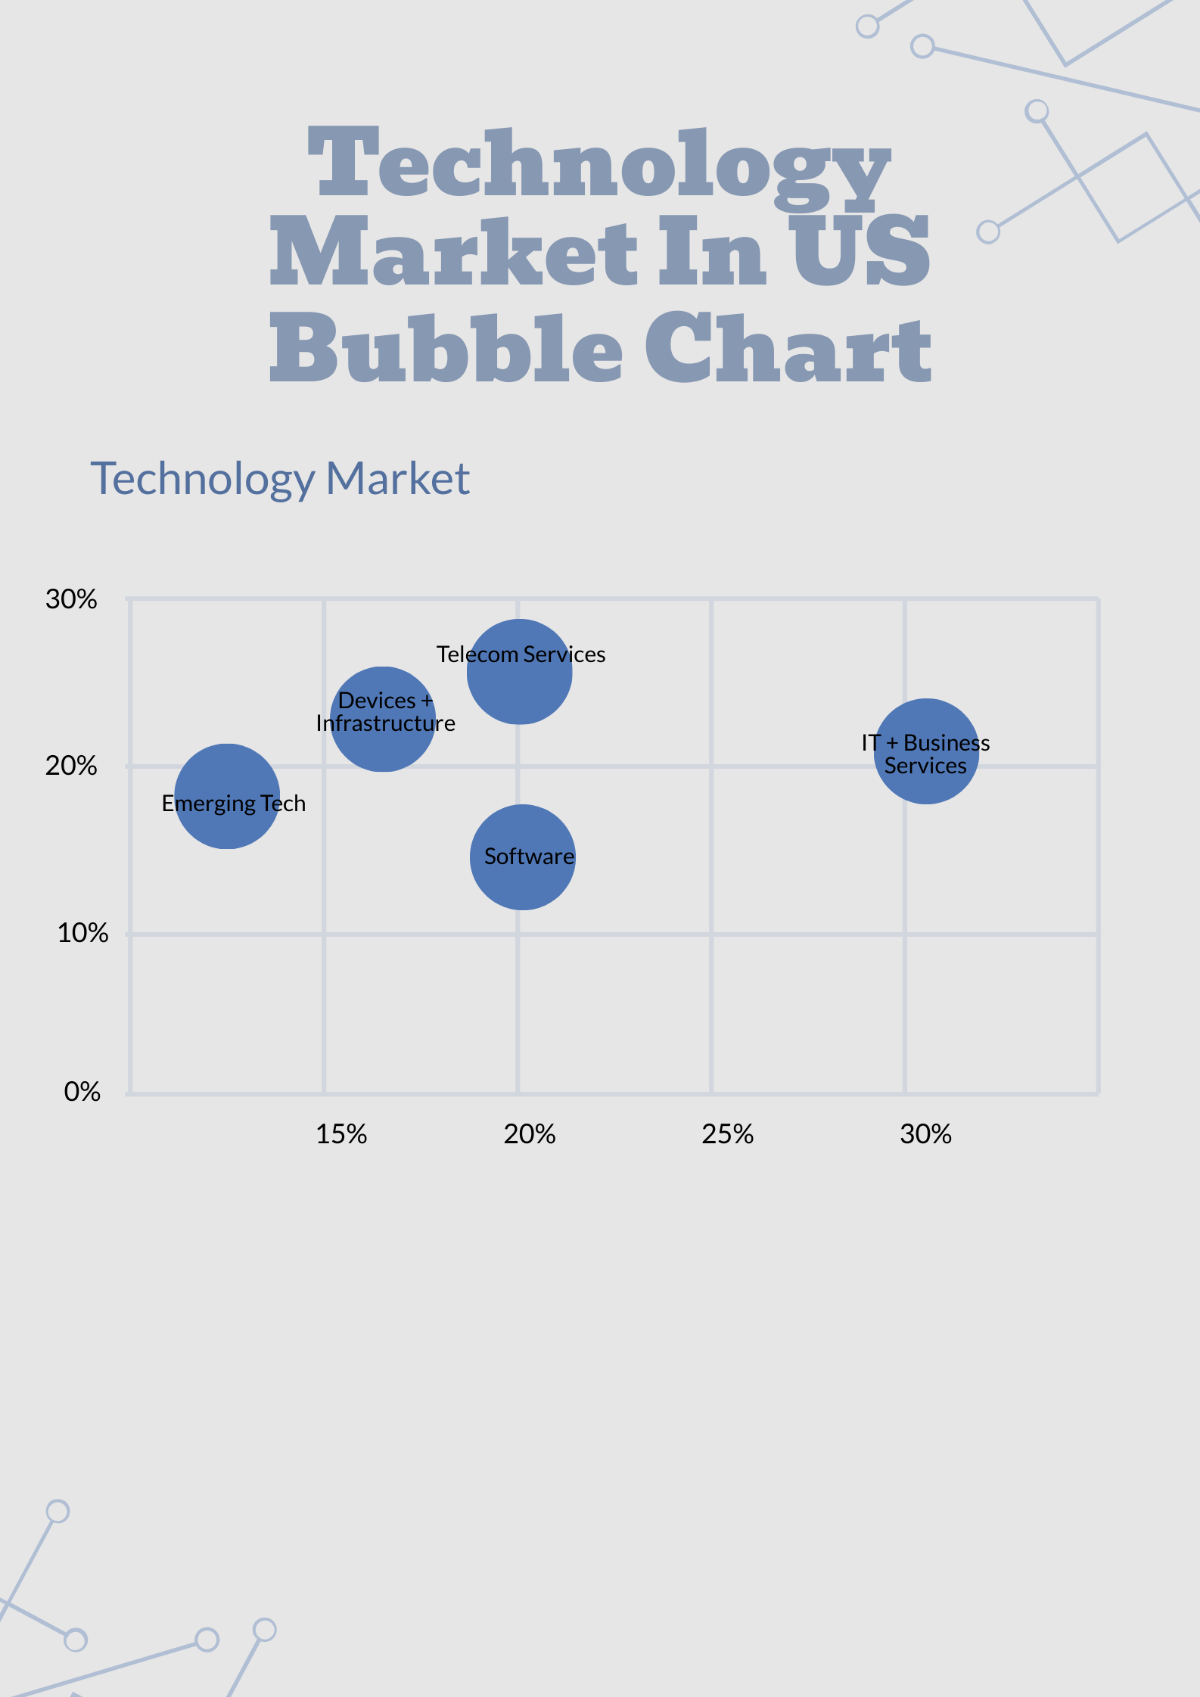 Technology Market In US Bubble Chart